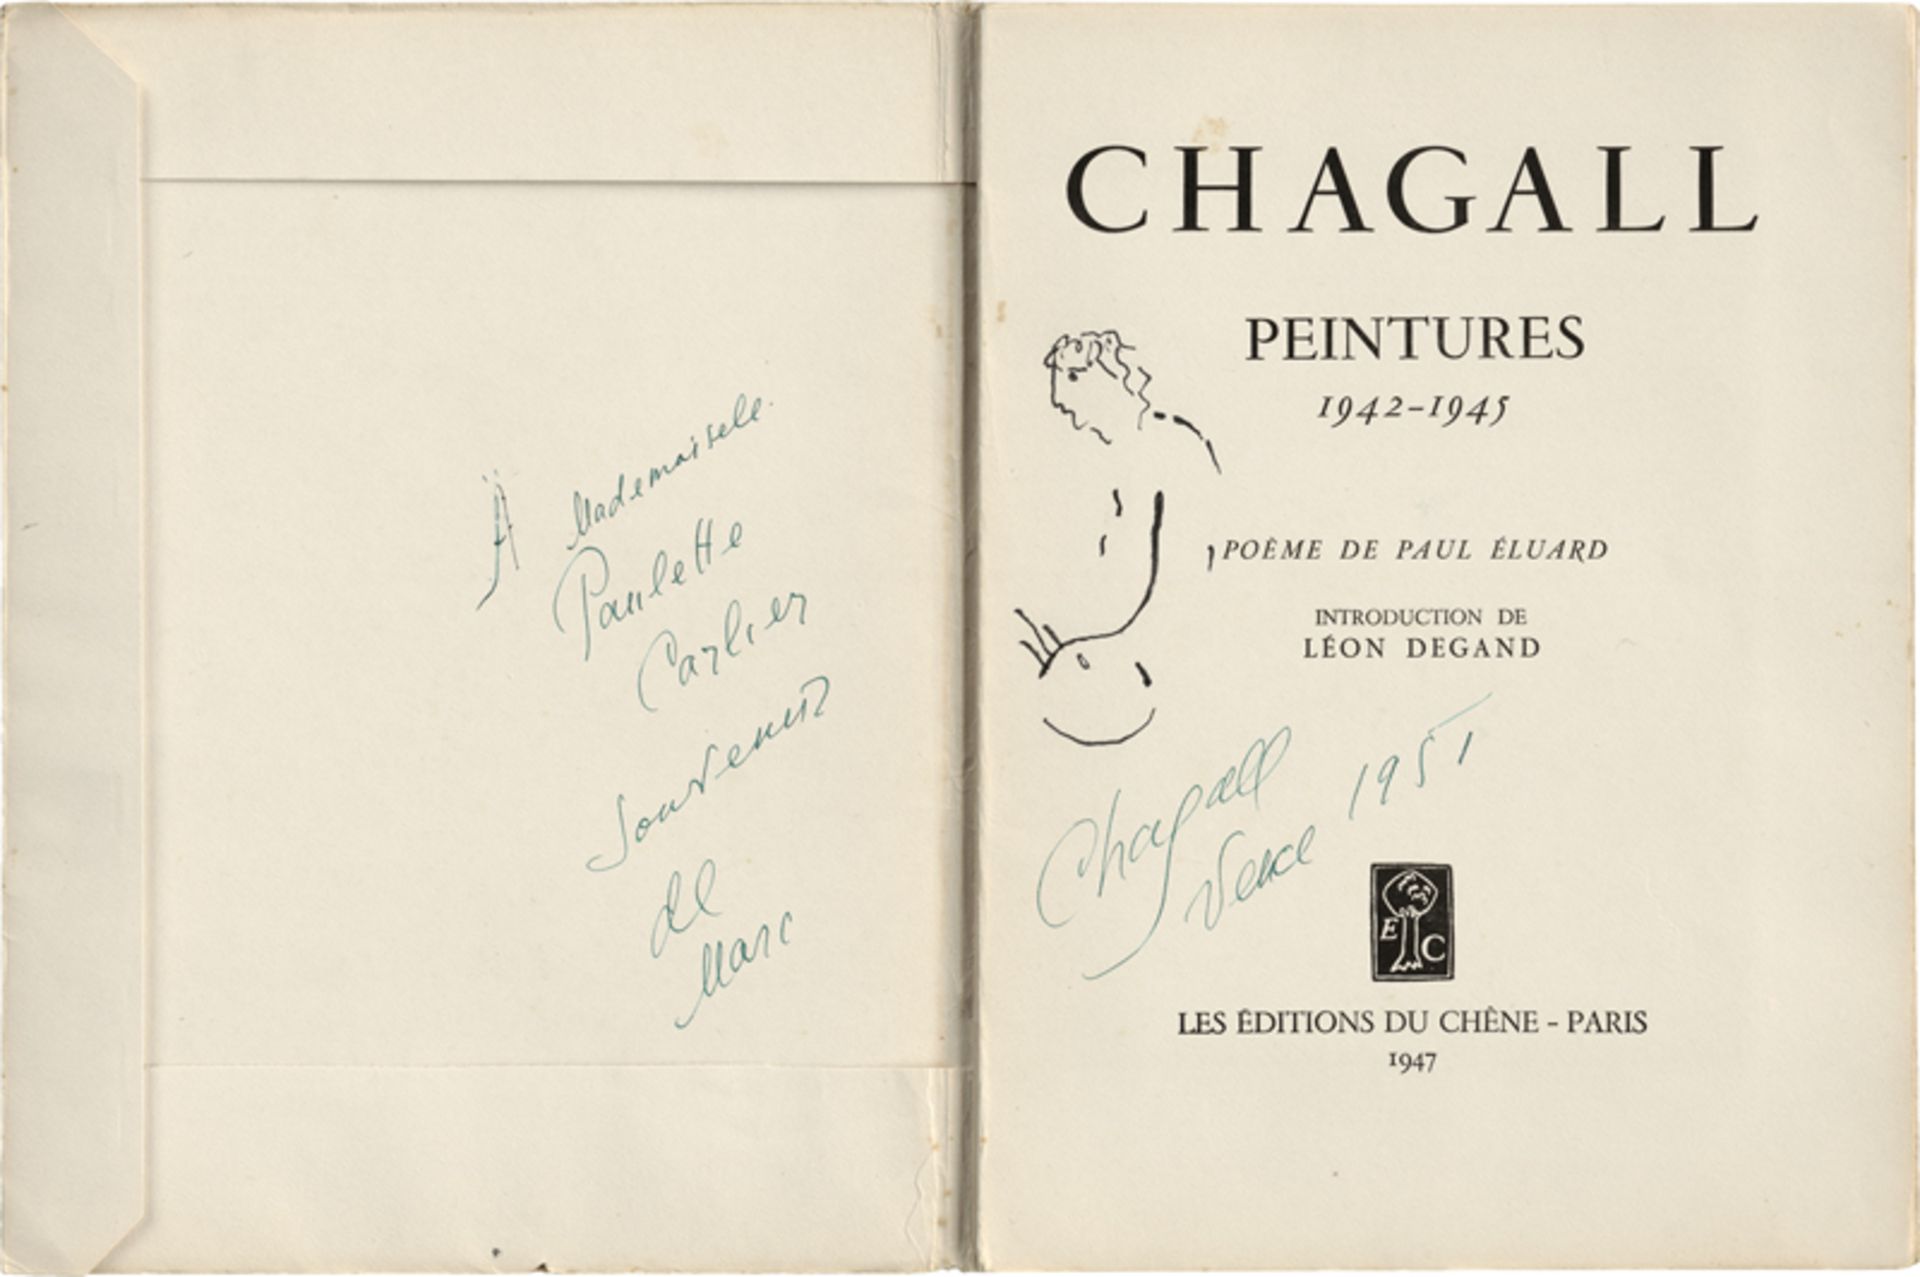 Chagall, Marc: Peintures 1942-1945